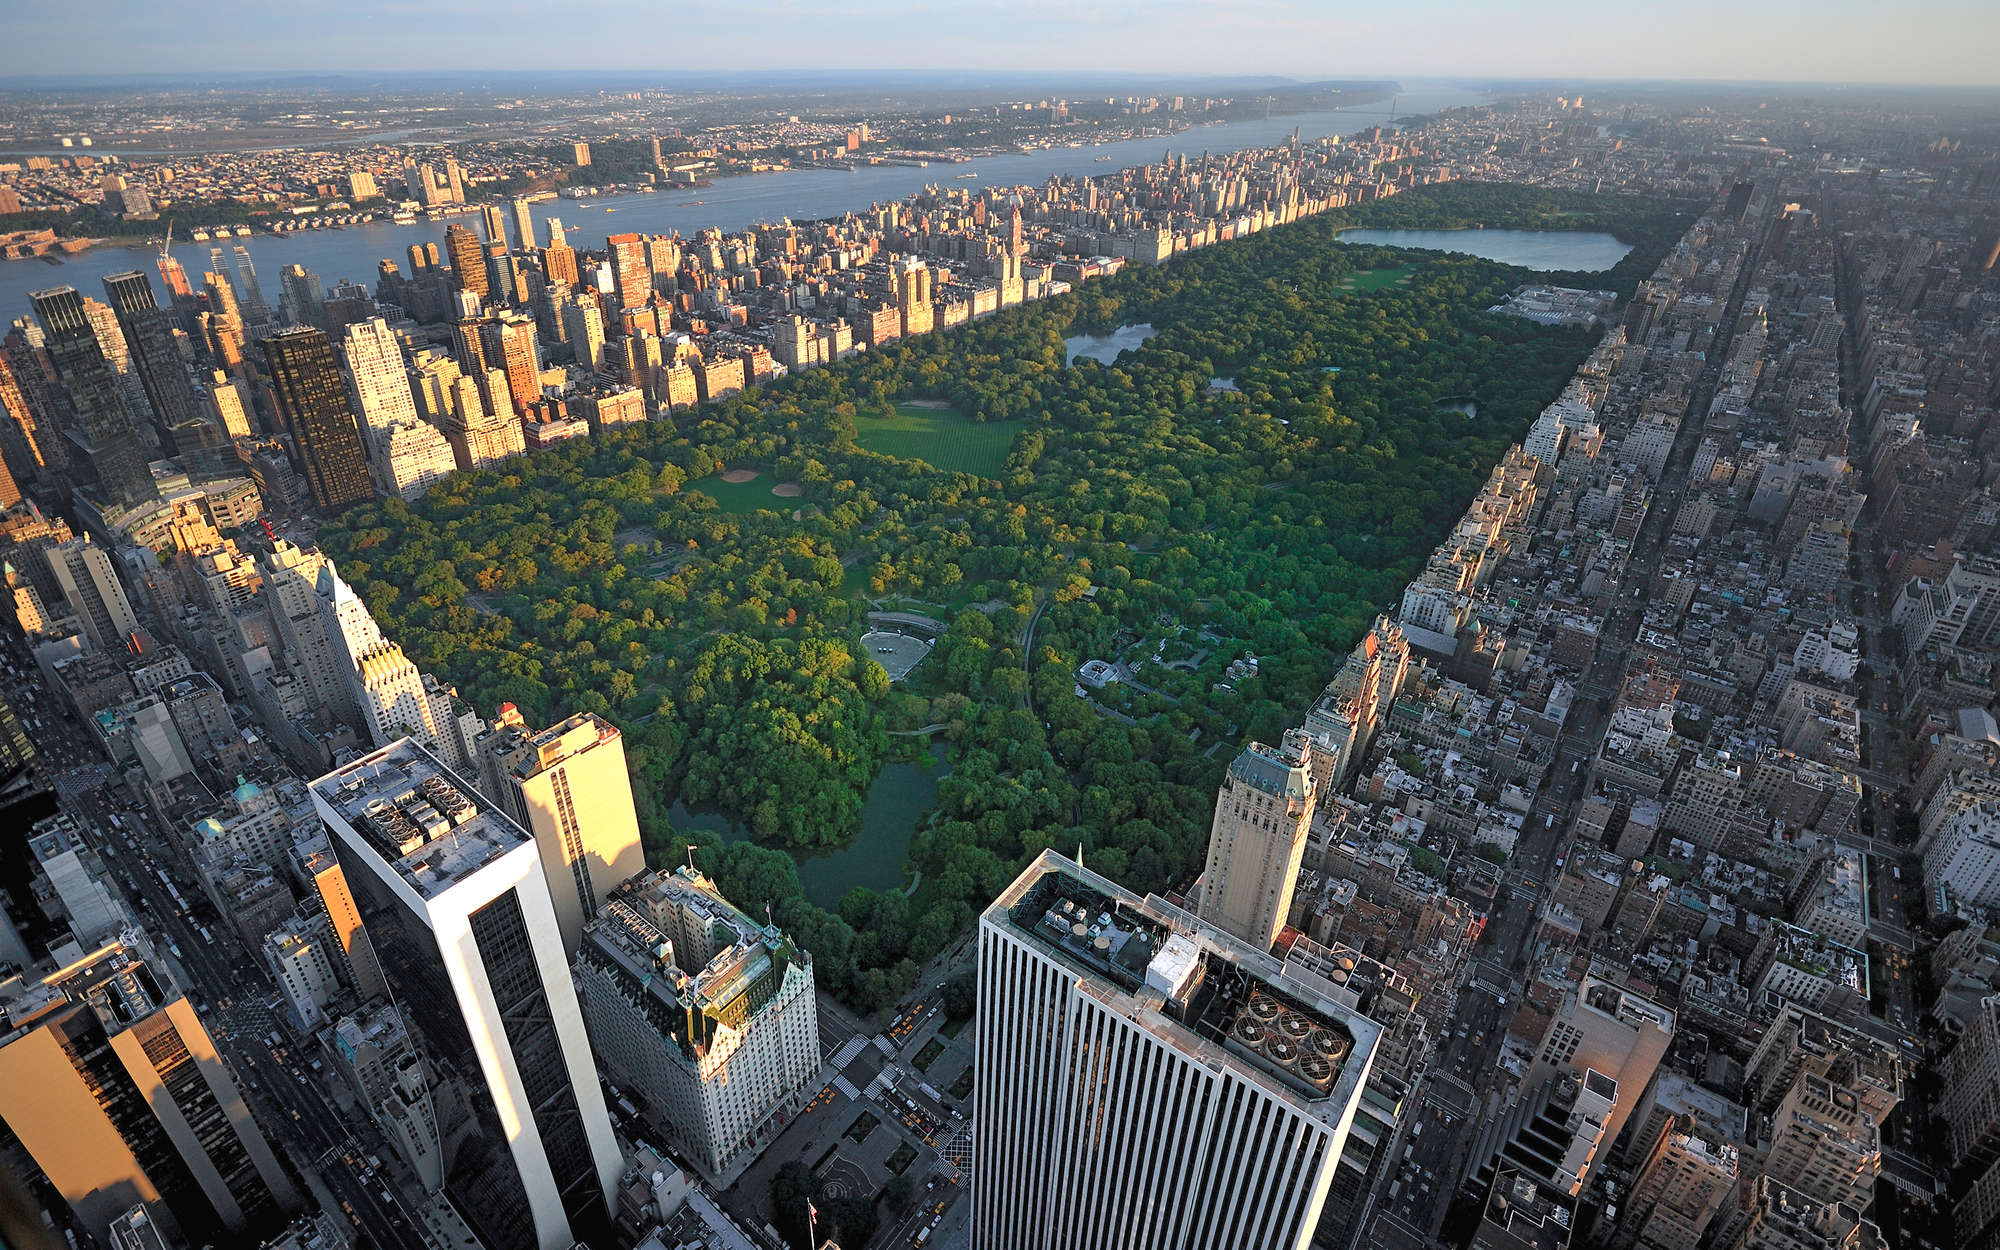             Digital behang New York Central Park van boven - parelmoer glad vlies
        